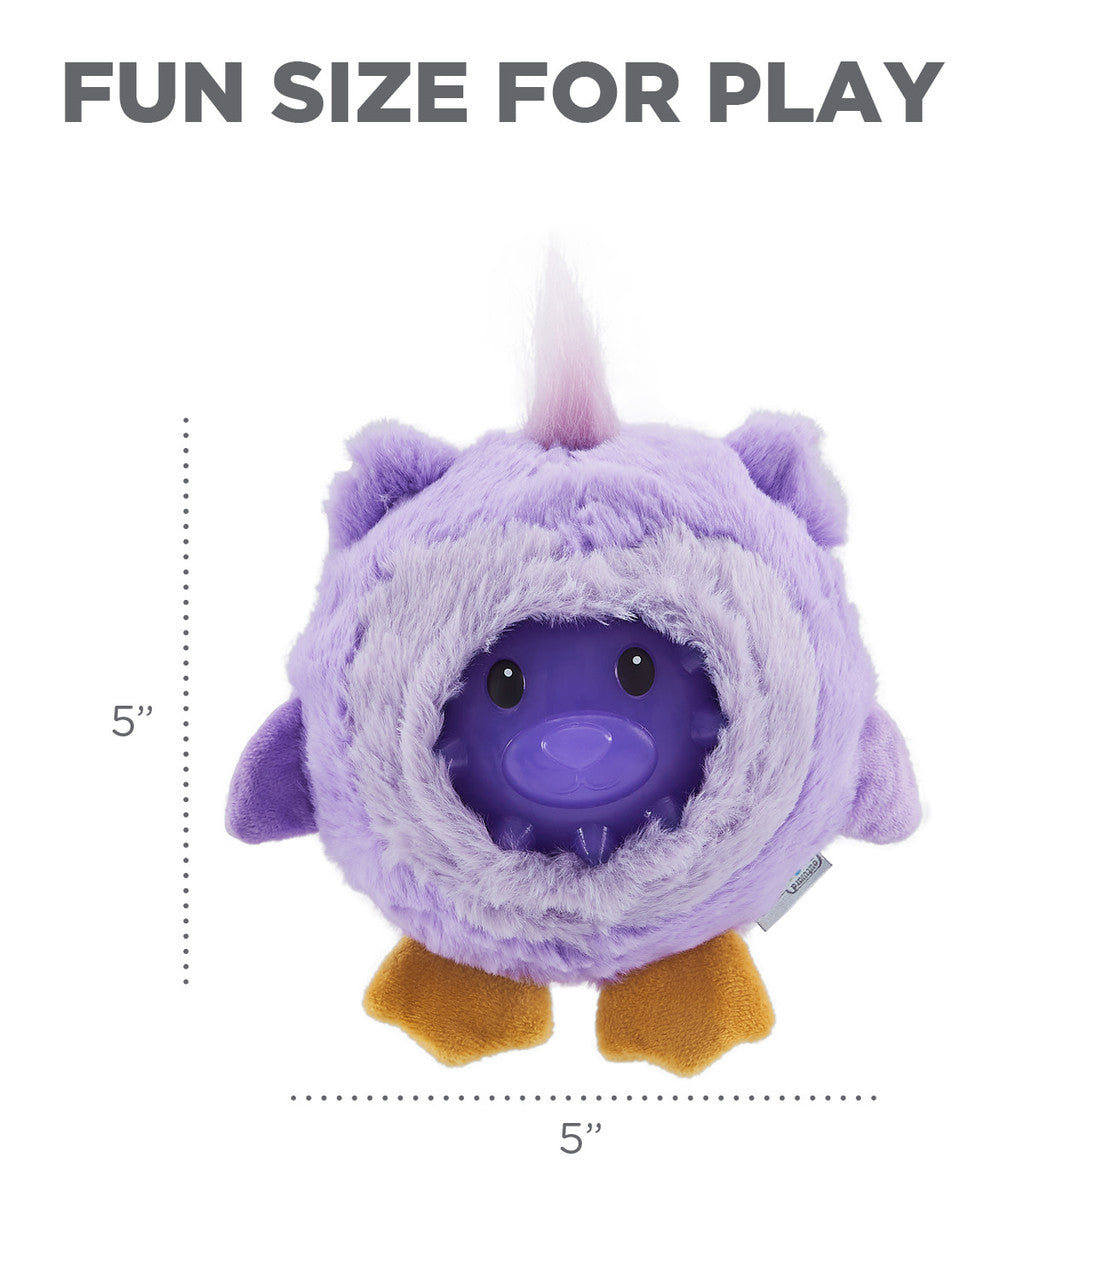 Unbelieva-Ball Owl Plush Toy Light up Dog Ball, Purple